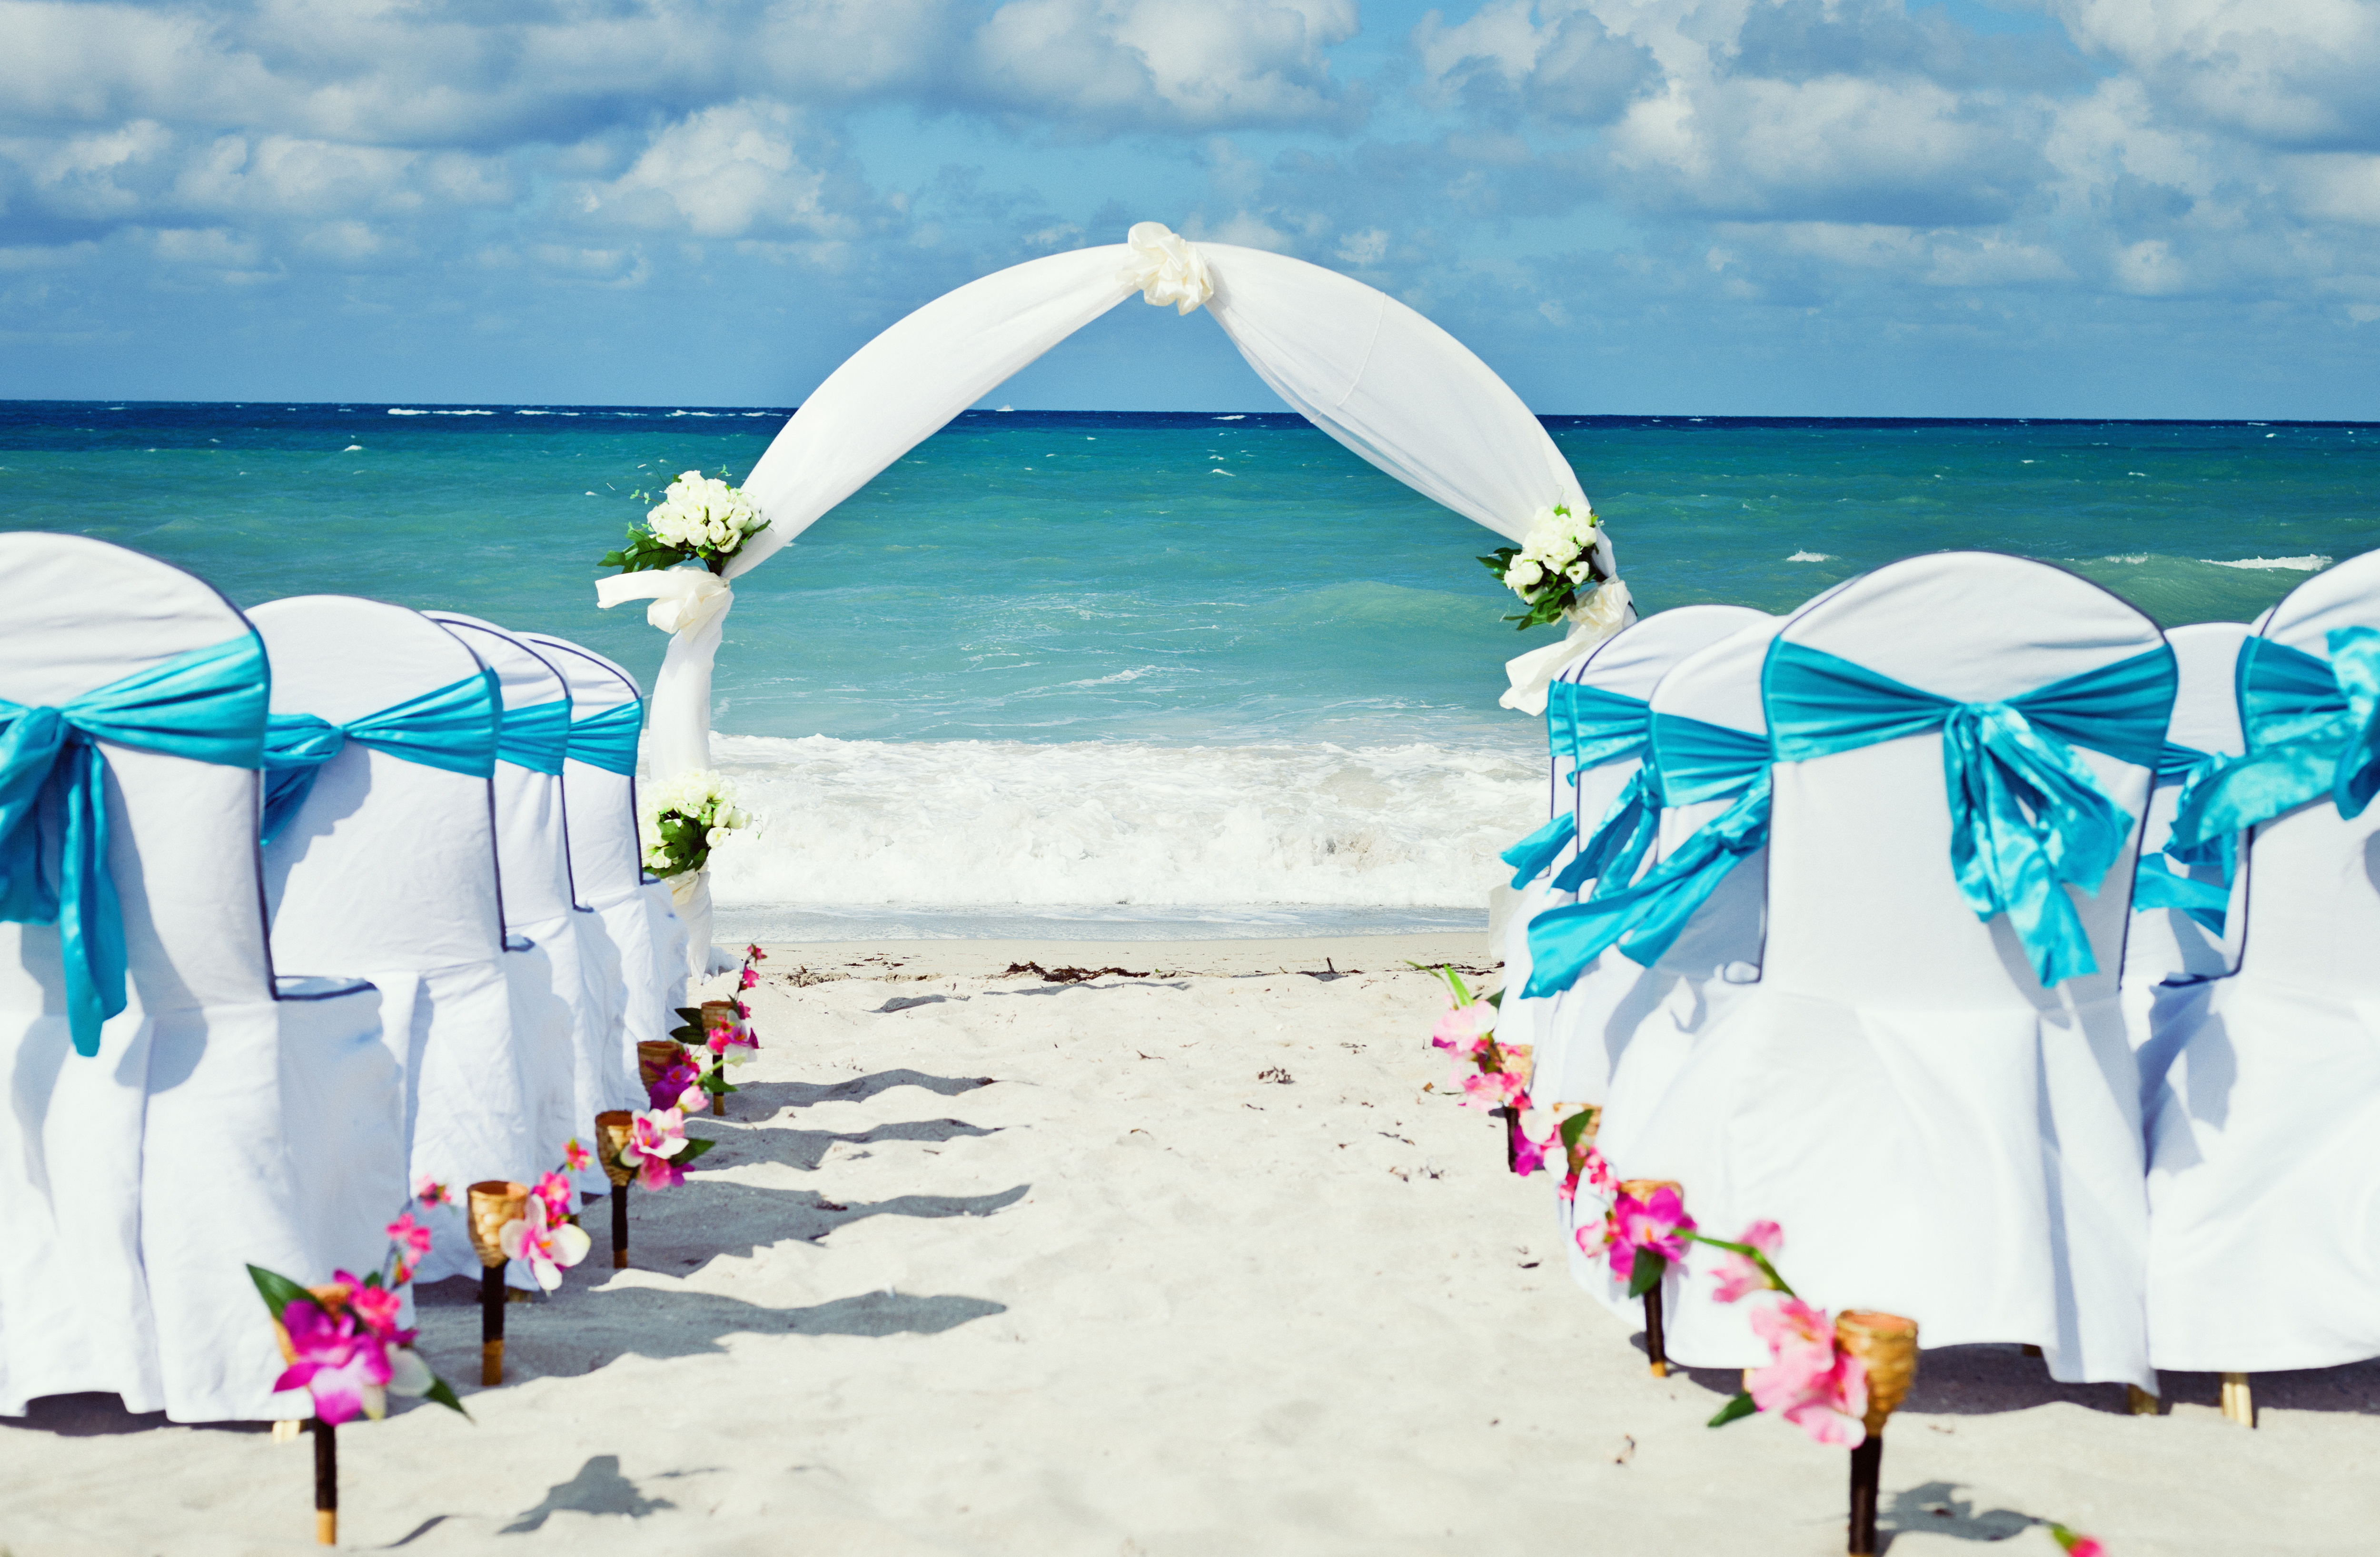 Why Choose A Destination Wedding? These Newlyweds Explain...